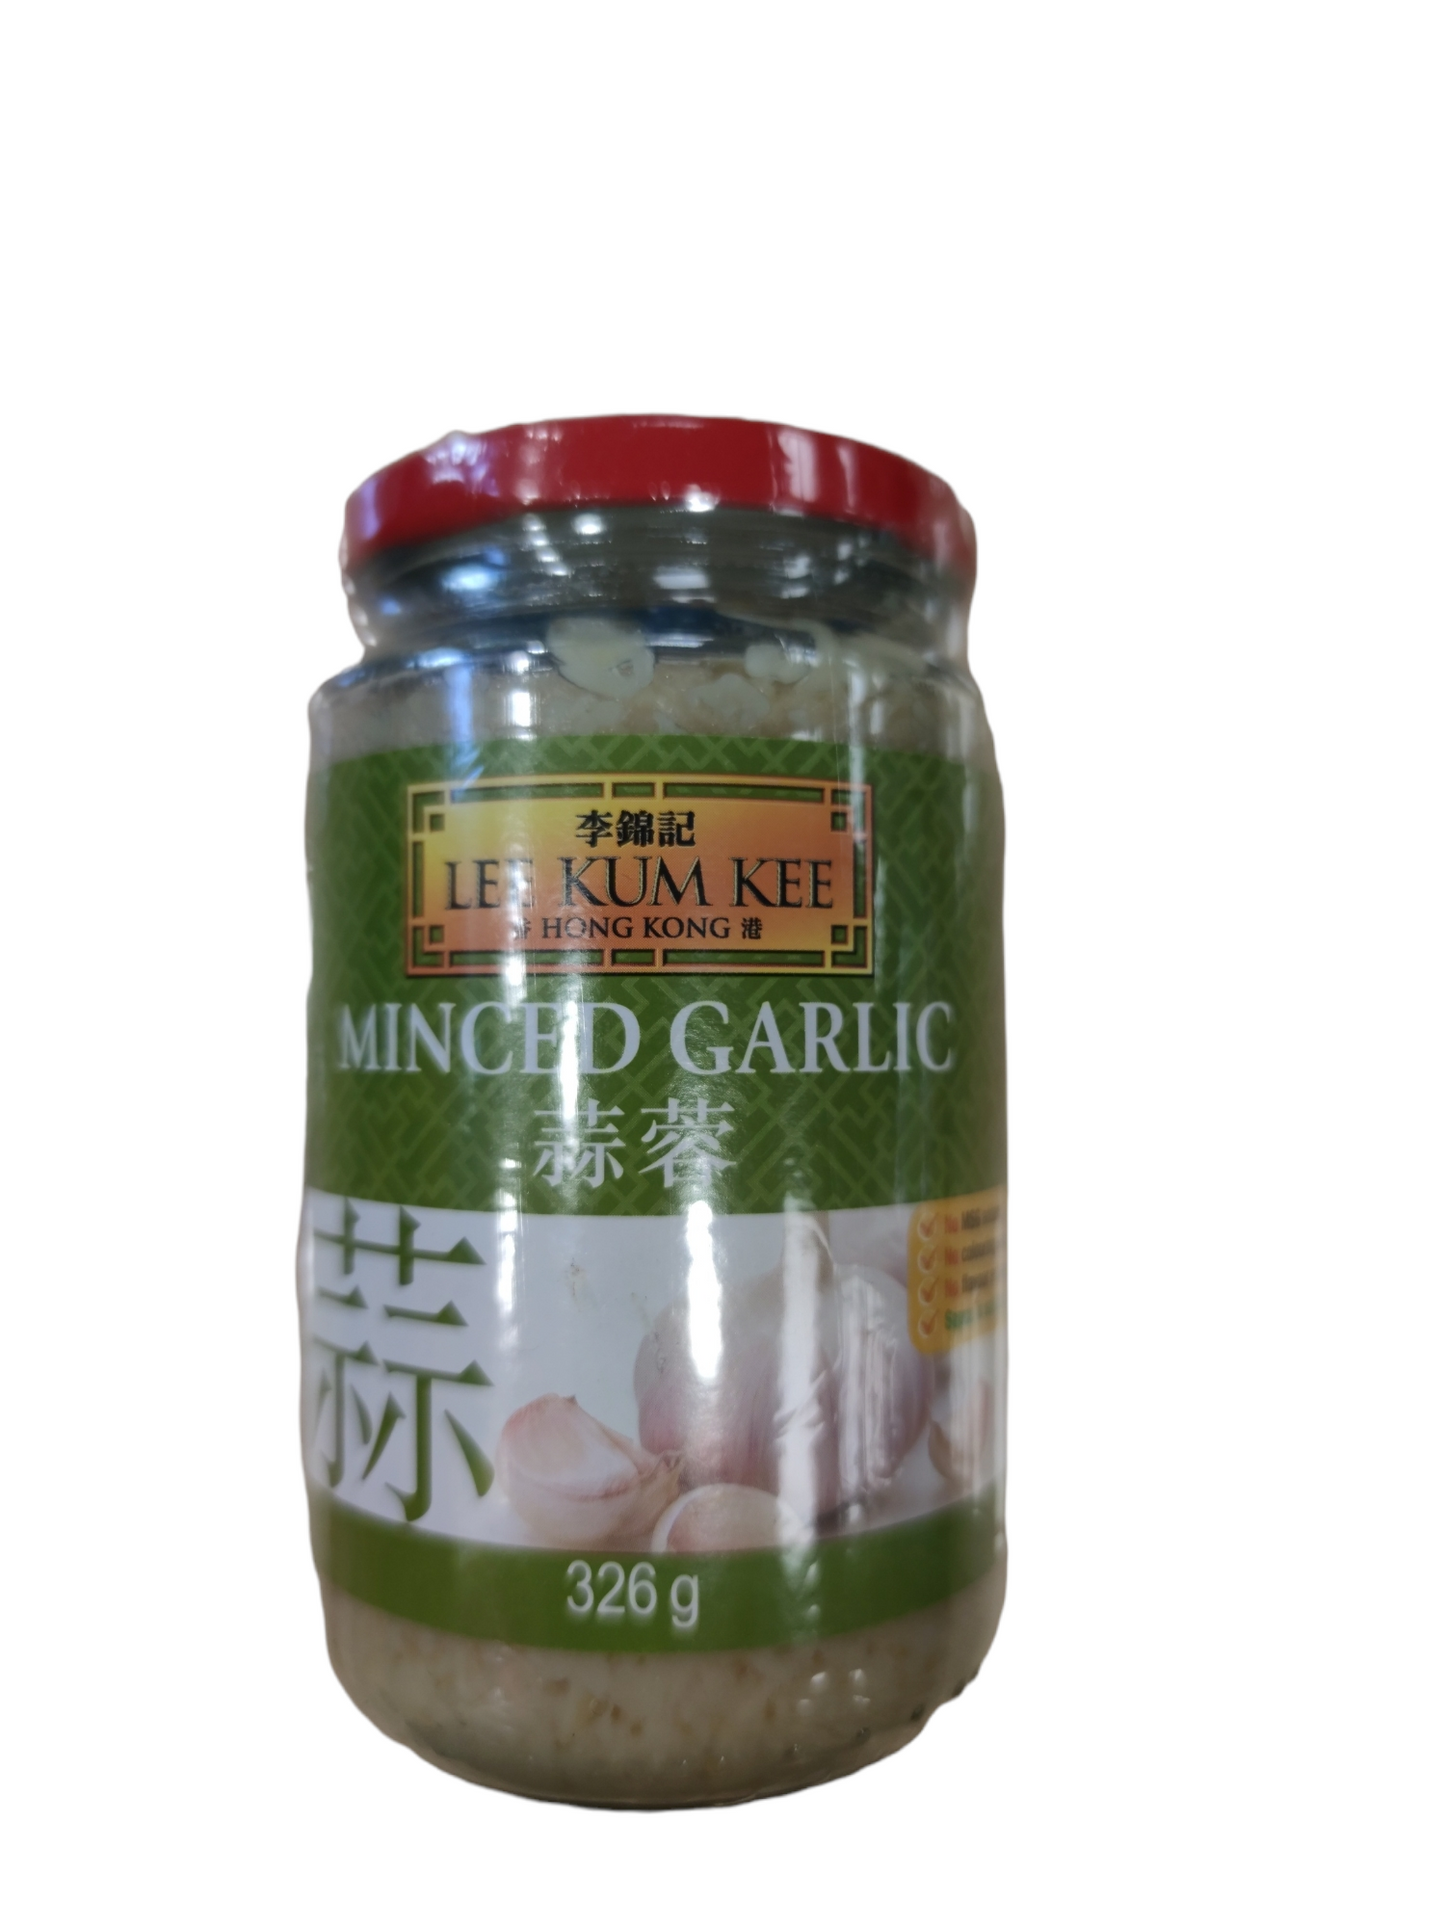 LKK Minced Garlic 326g 李錦記蒜蓉